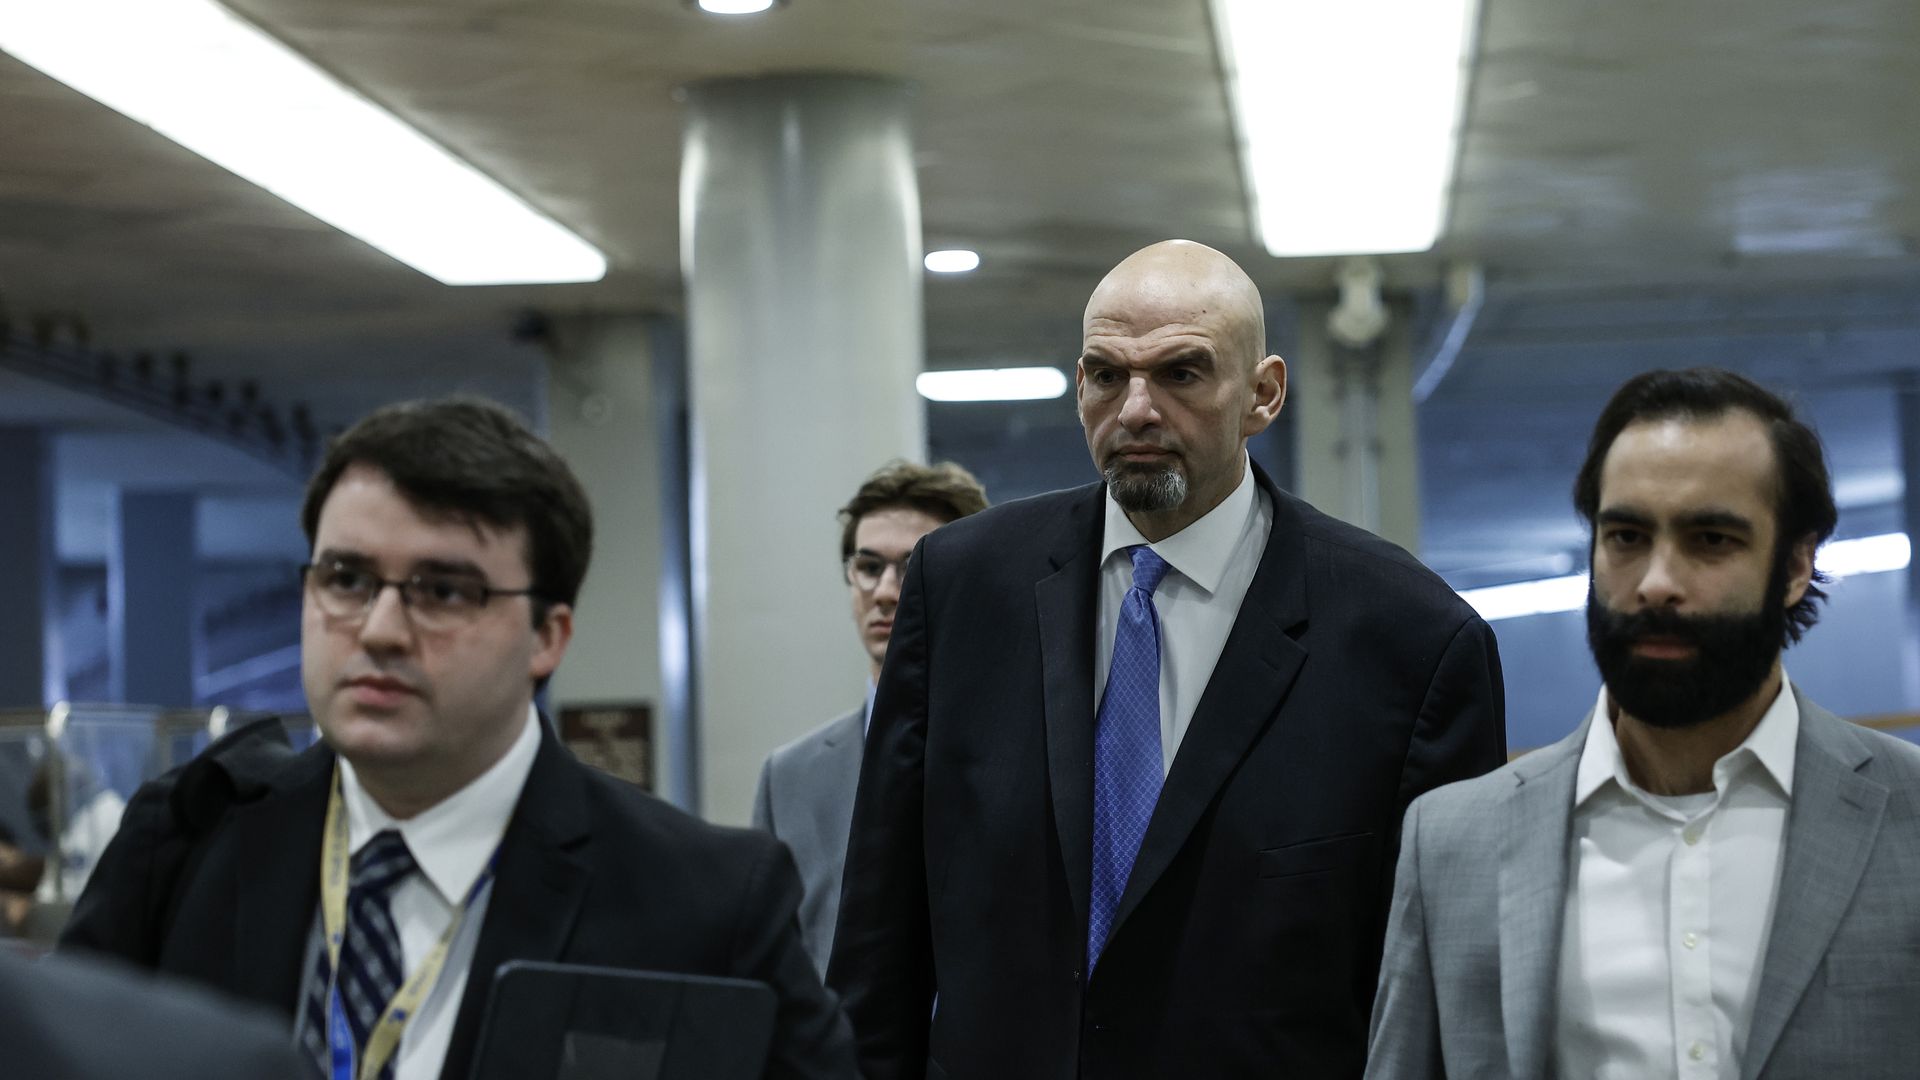 Sen. John Fetterman, wearing a dark gray suit, white shirt and blue tie, walks through the Senate basement with staffers.